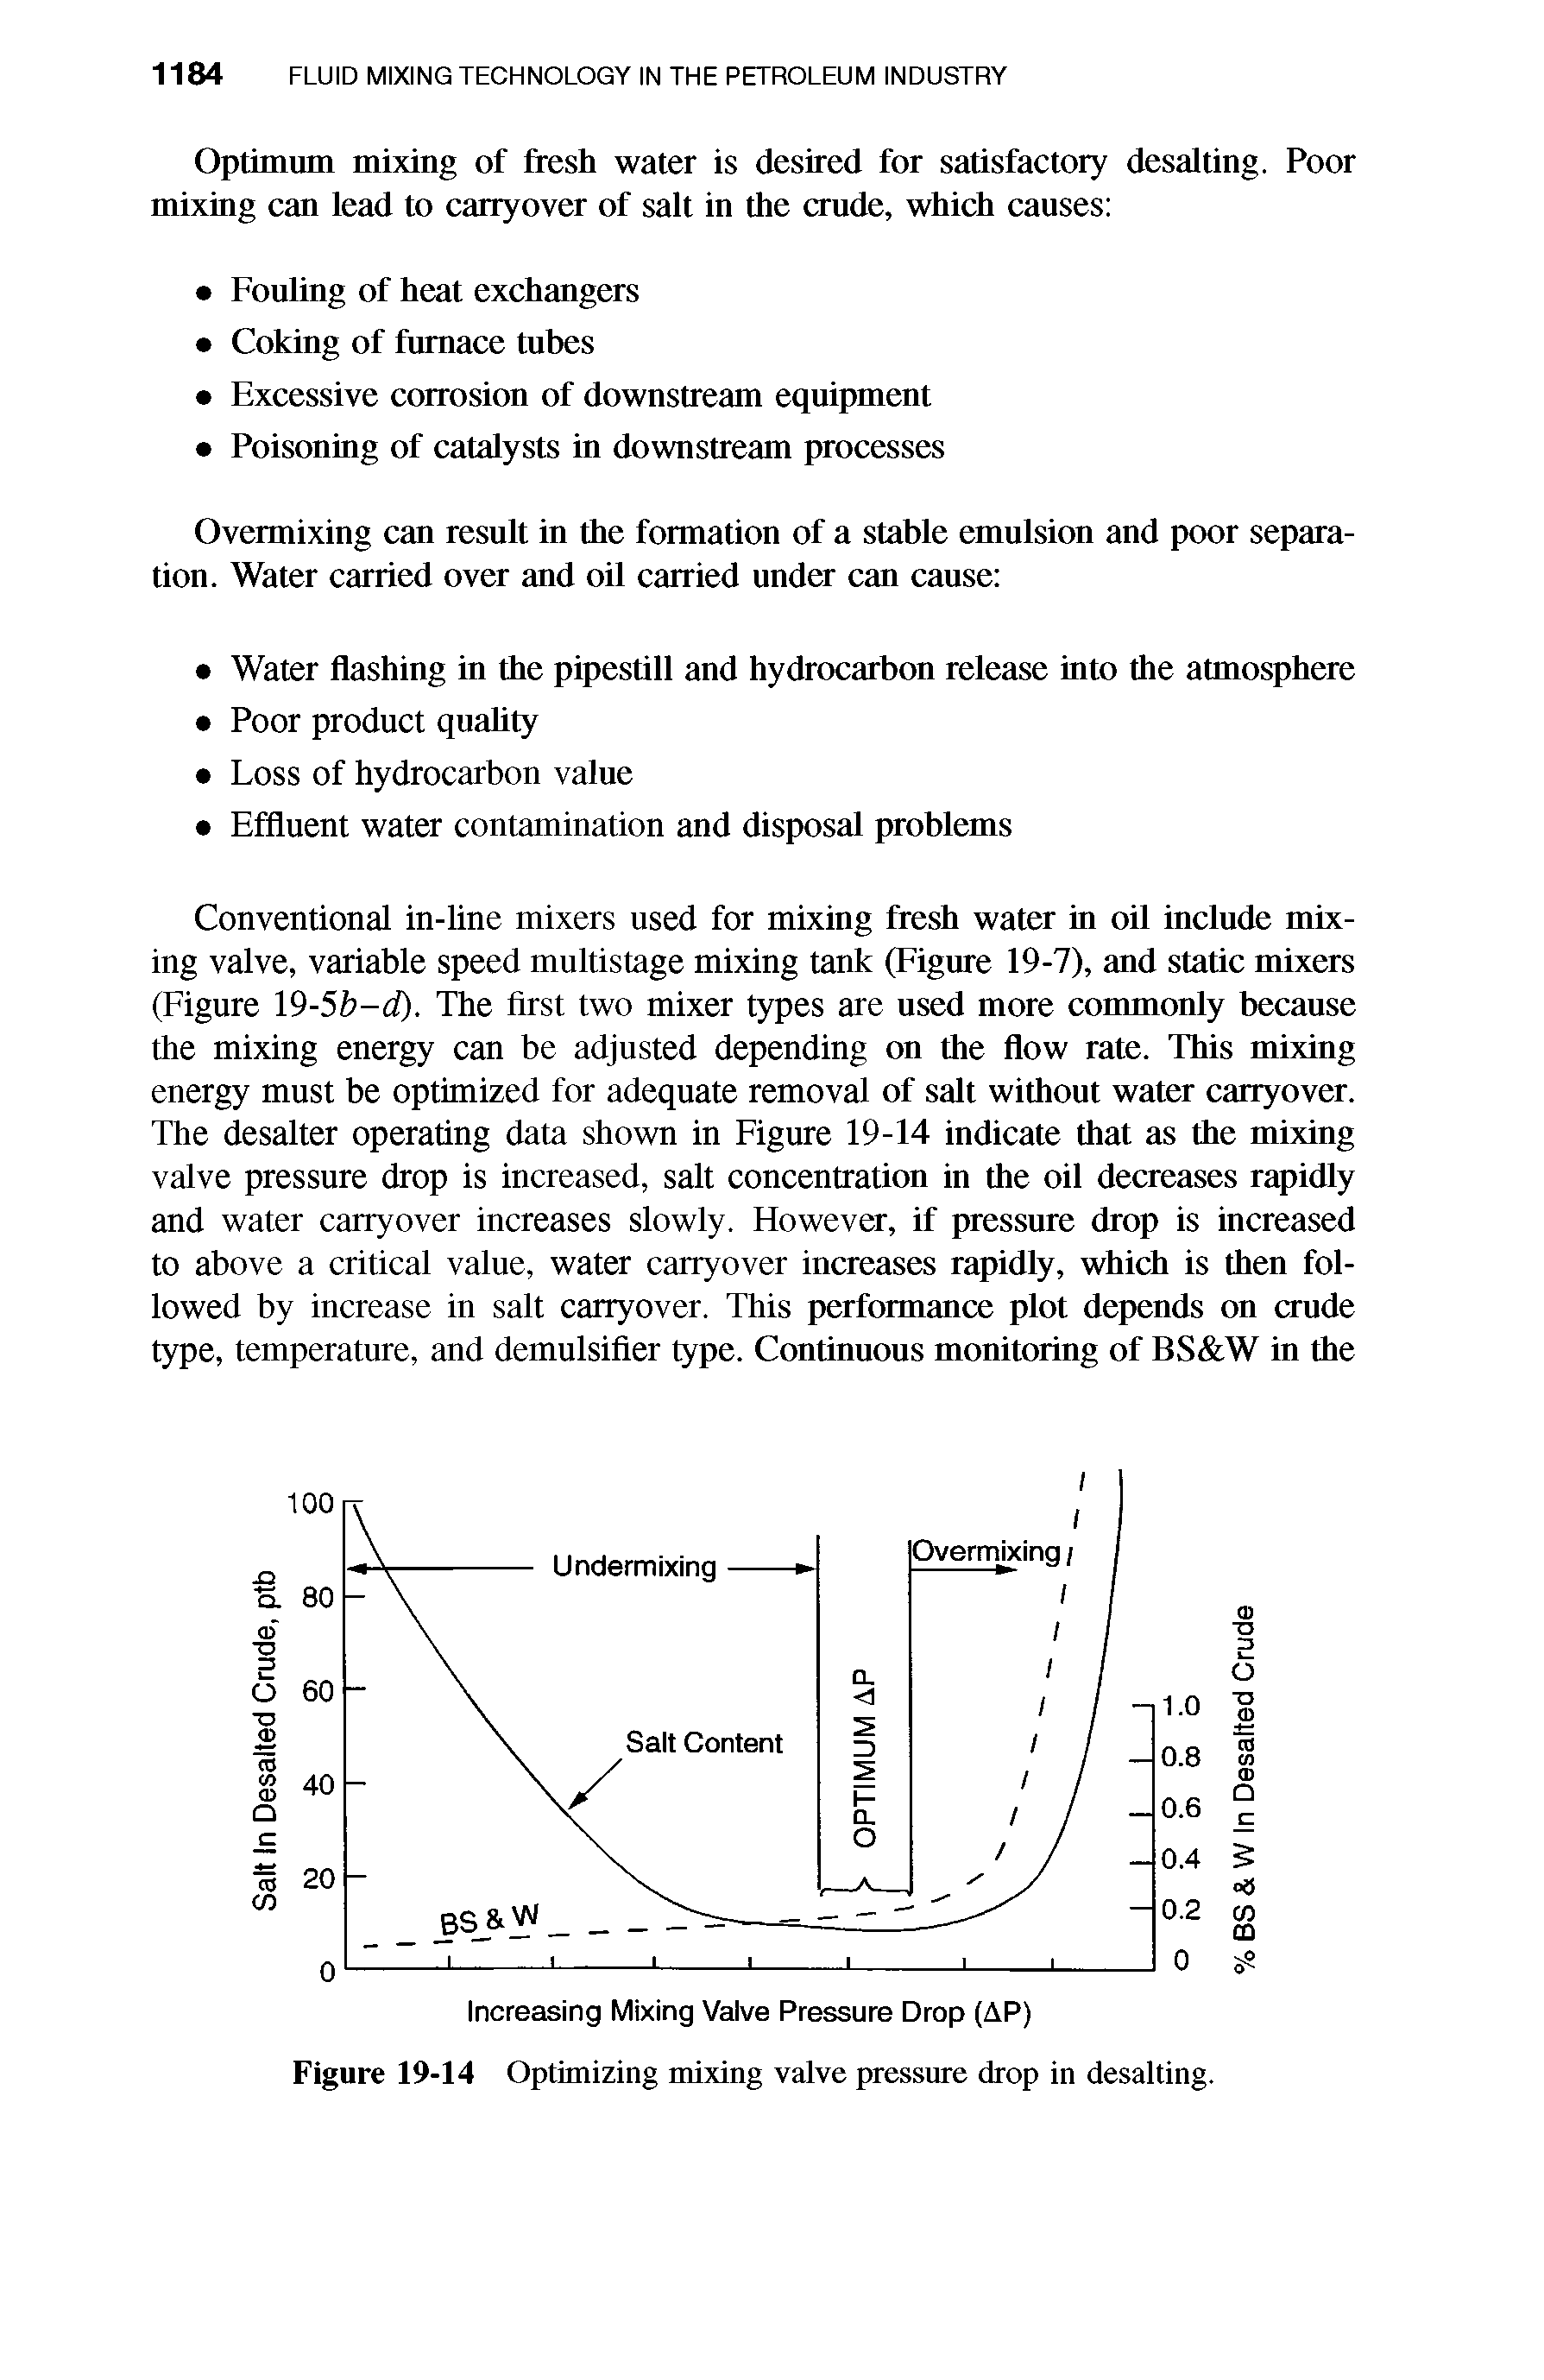 Figure 19-14 Optimizing mixing valve pressure drop in desalting.